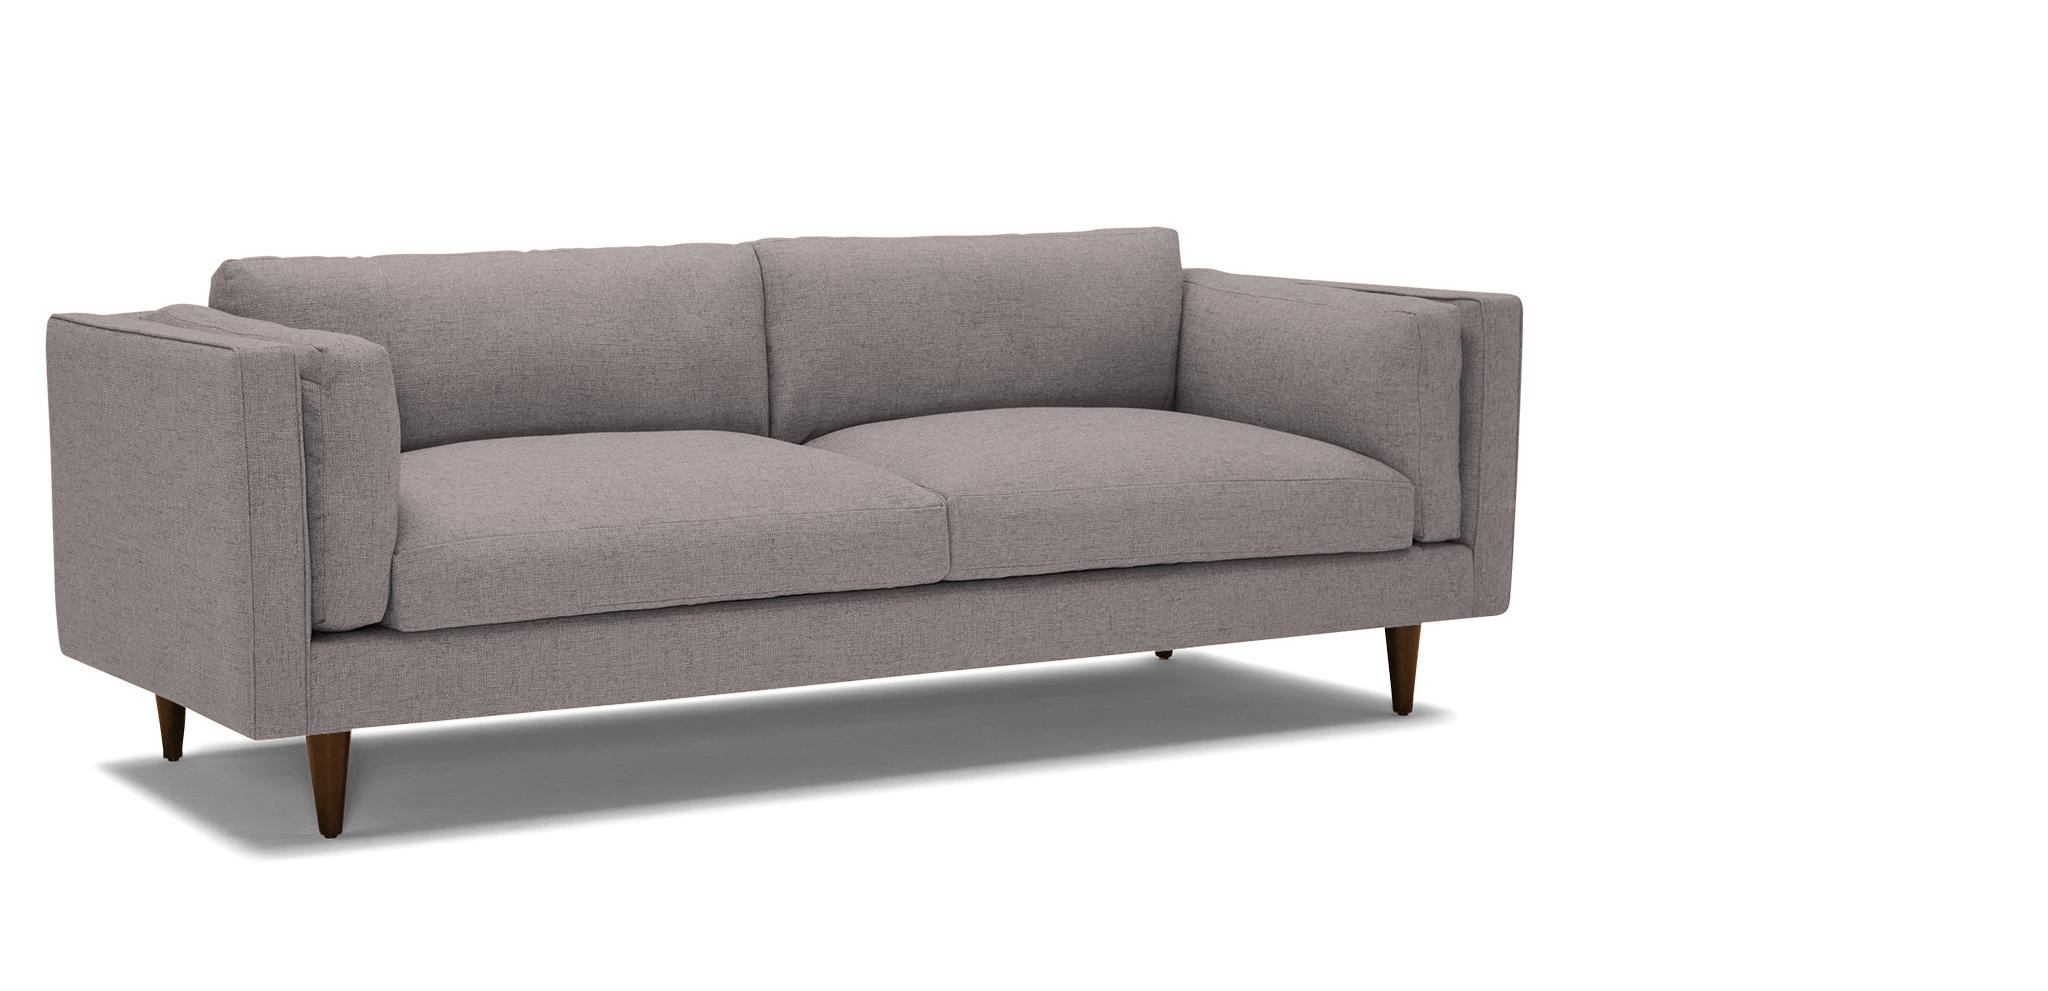 Purple Parker Mid Century Modern Sofa - Sunbrella Premier Wisteria - Mocha - Image 1